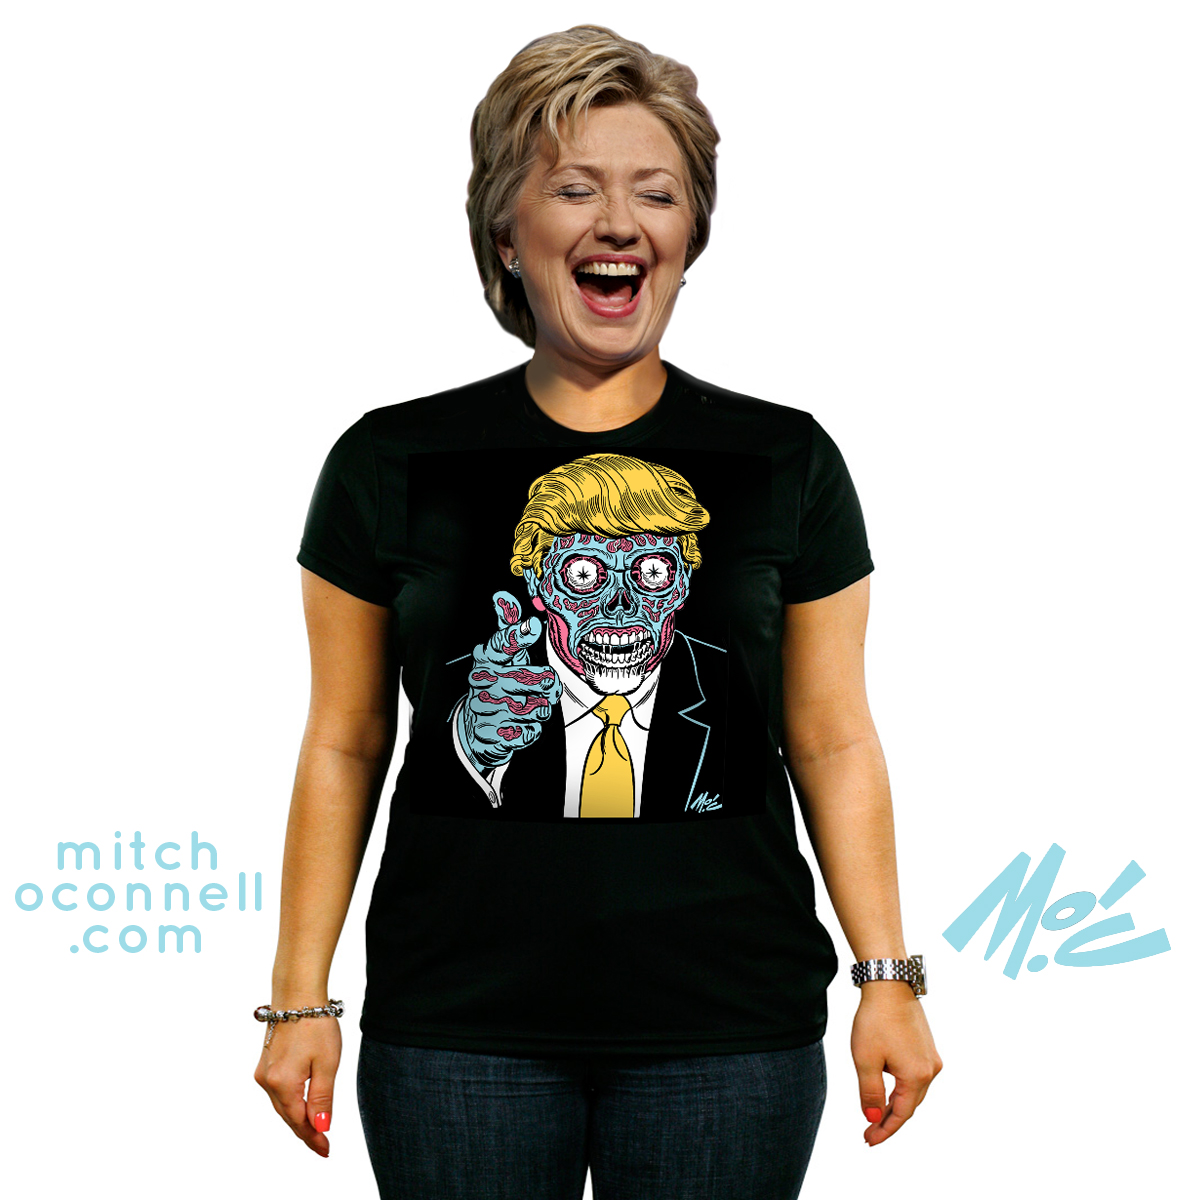 Mitch Oconnell. I Love Trump Shirt. Blue Aliens in Shirt. T me mash